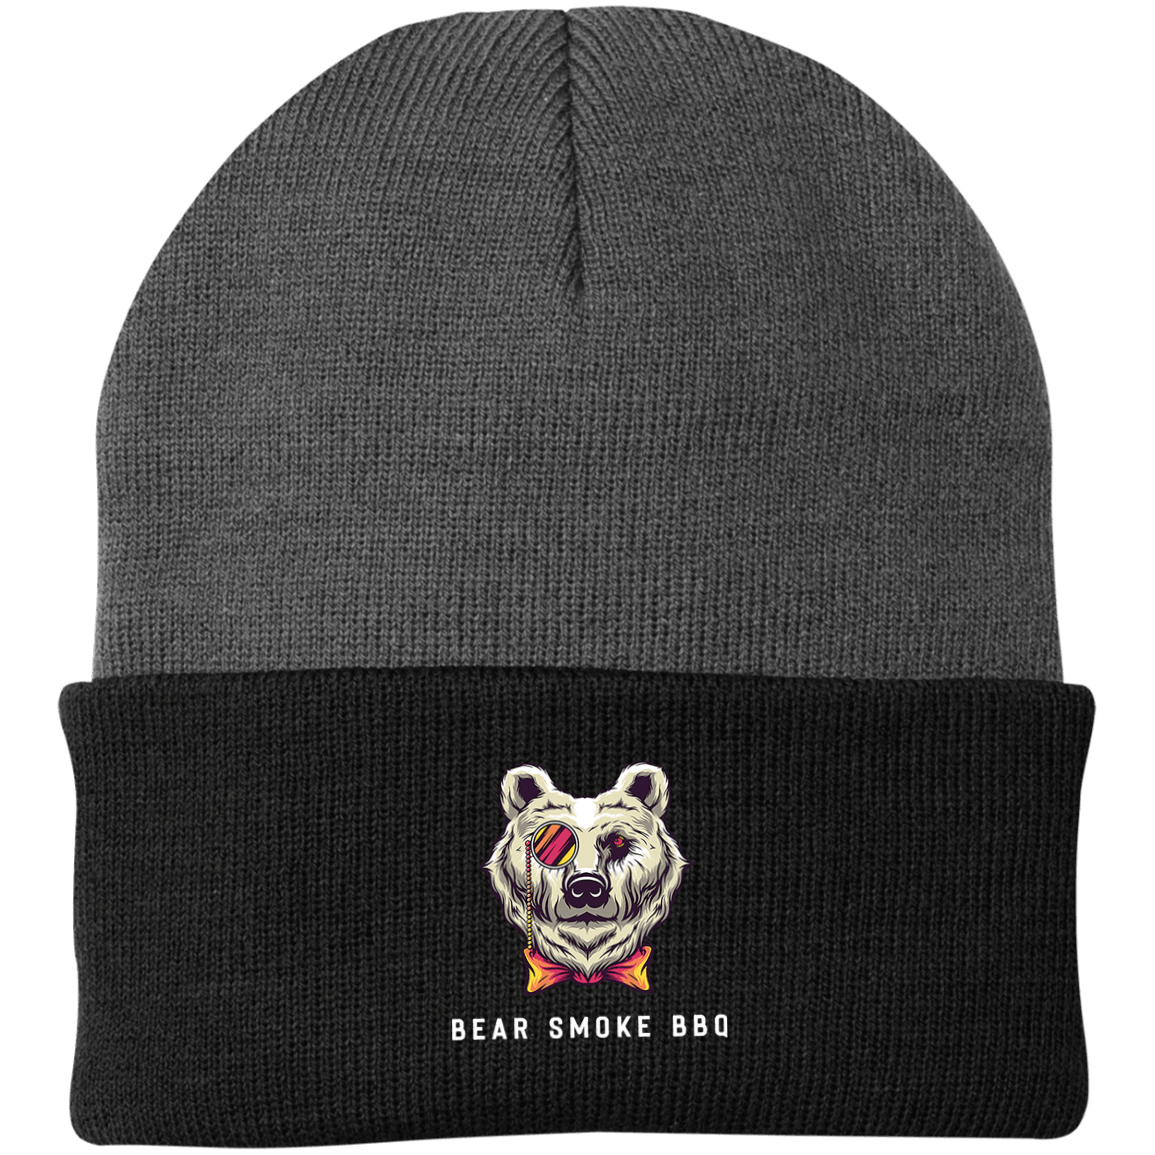 Bear Smoke Knit Cap - Bear Smoke BBQ